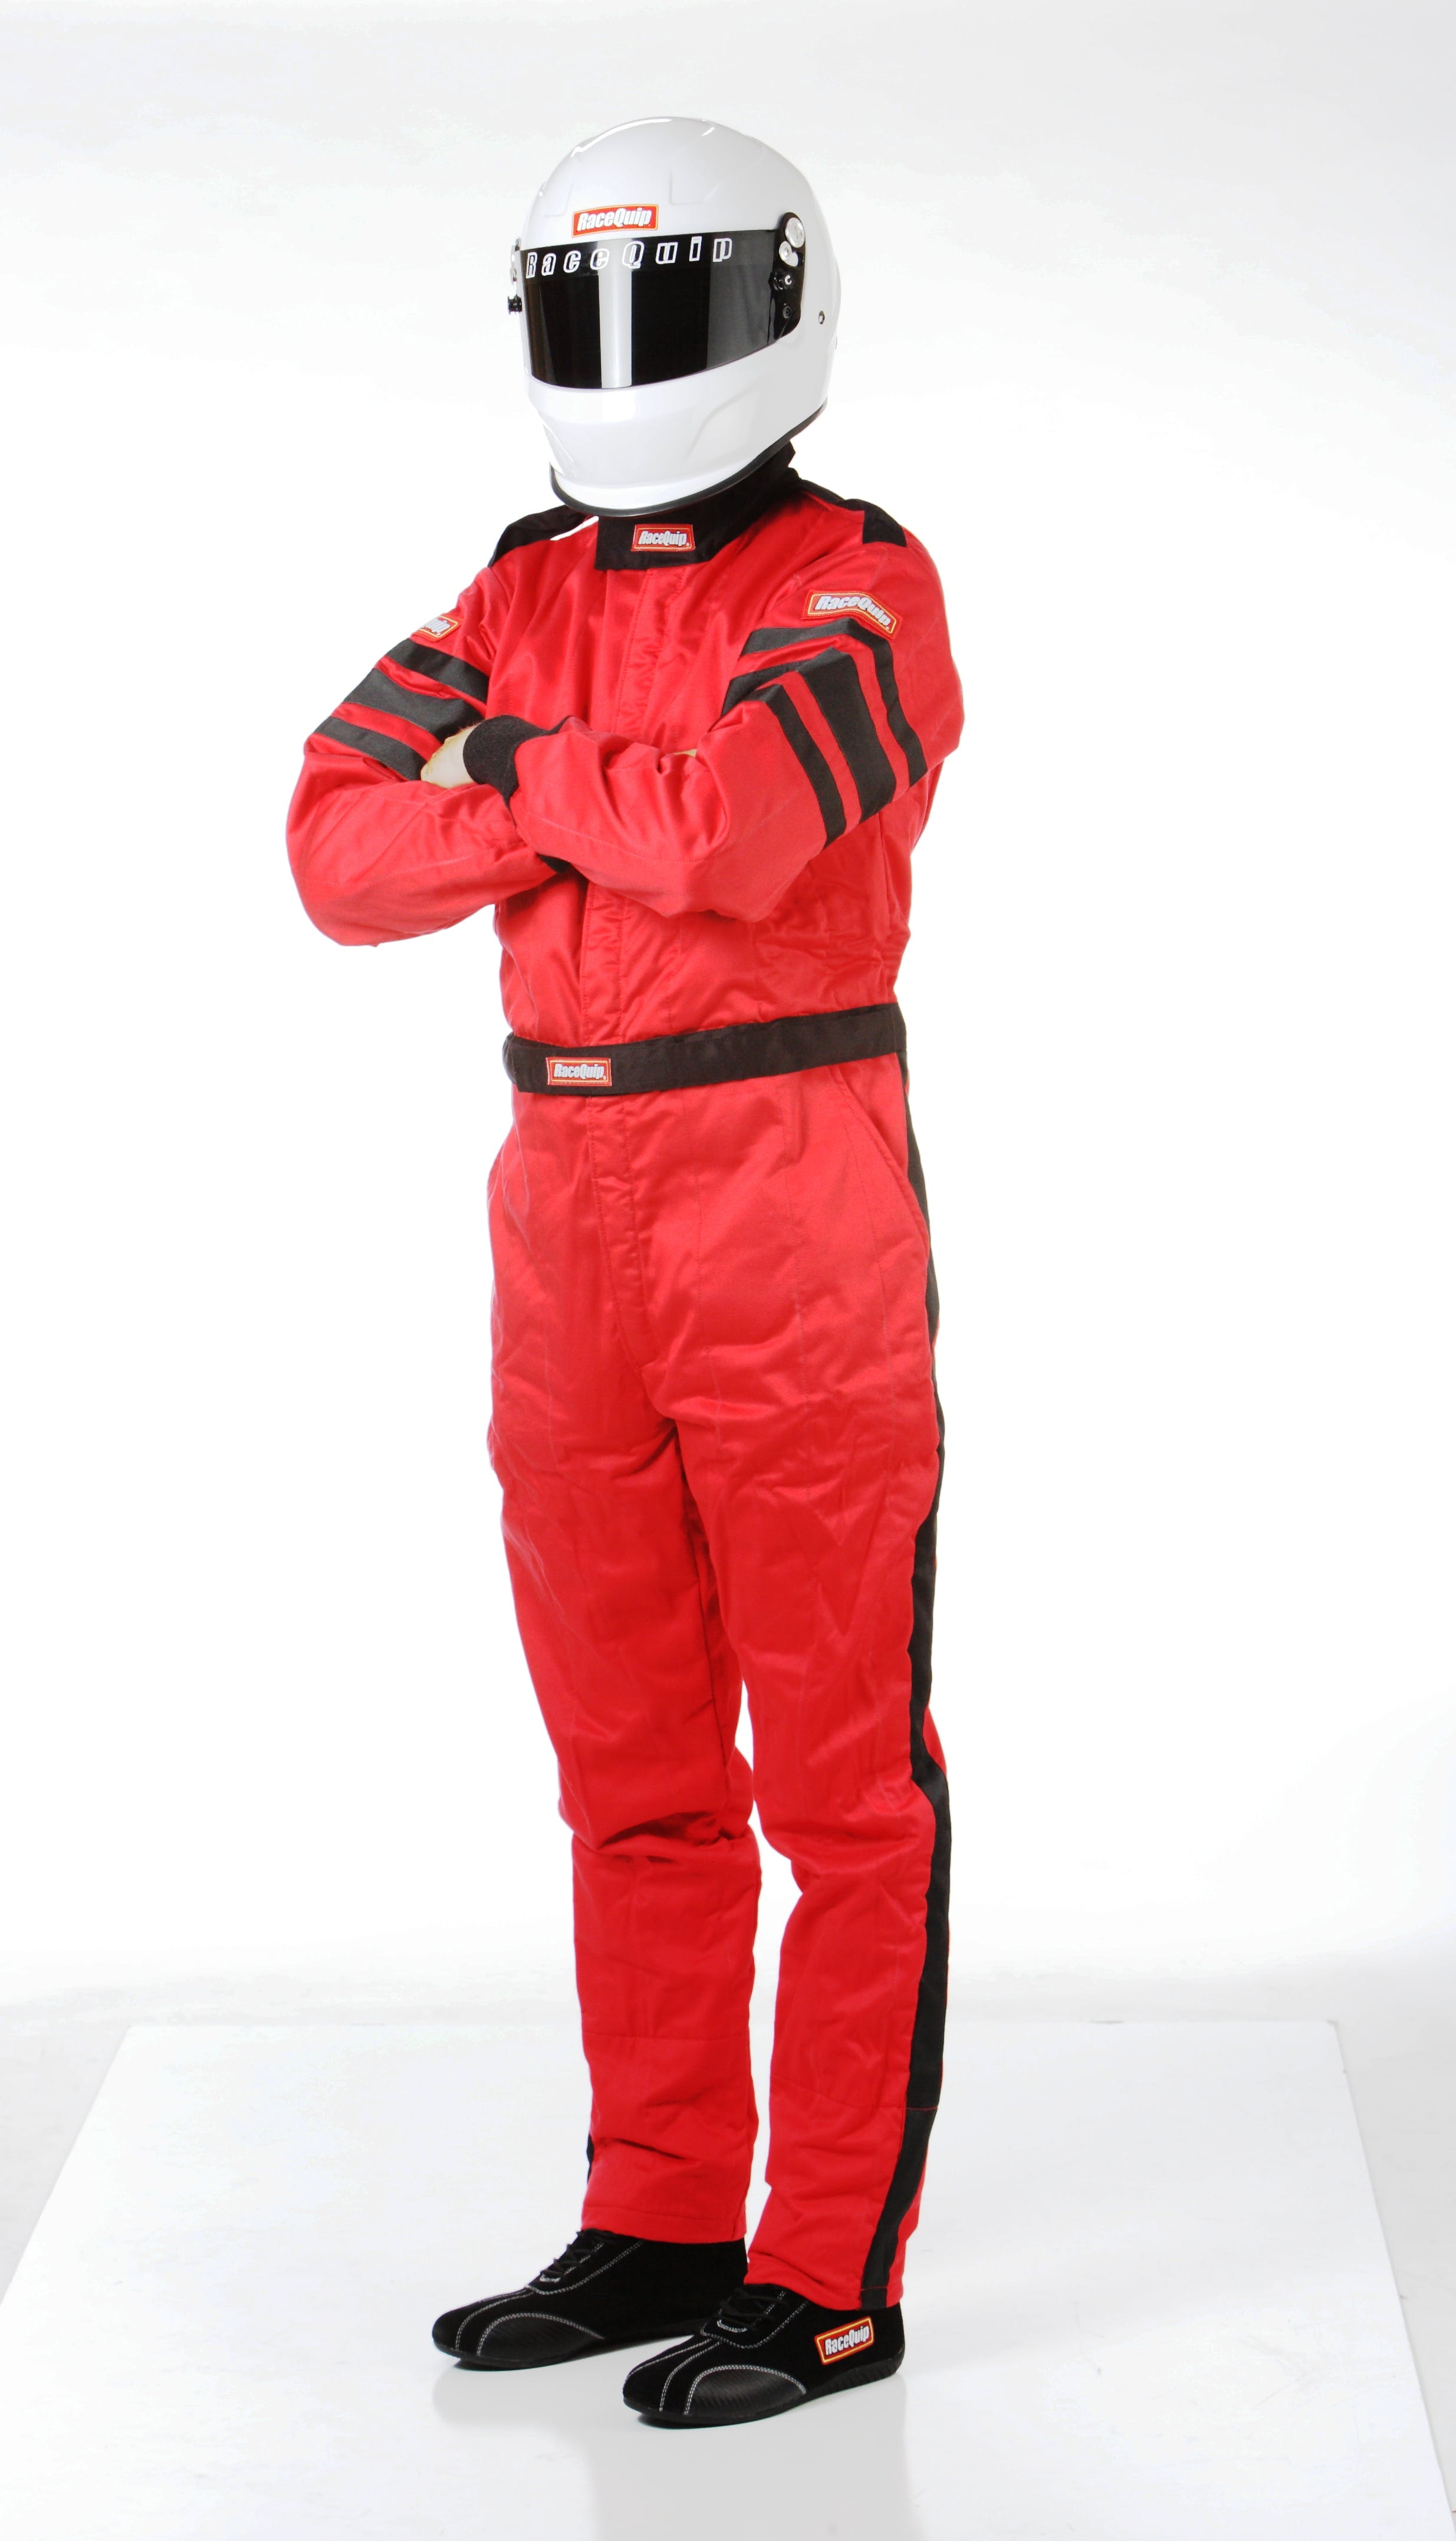 RaceQuip 120013 SFI-5 Pyrovatex One-Piece Multi-Layer Racing Fire Suit (Red, Medium)